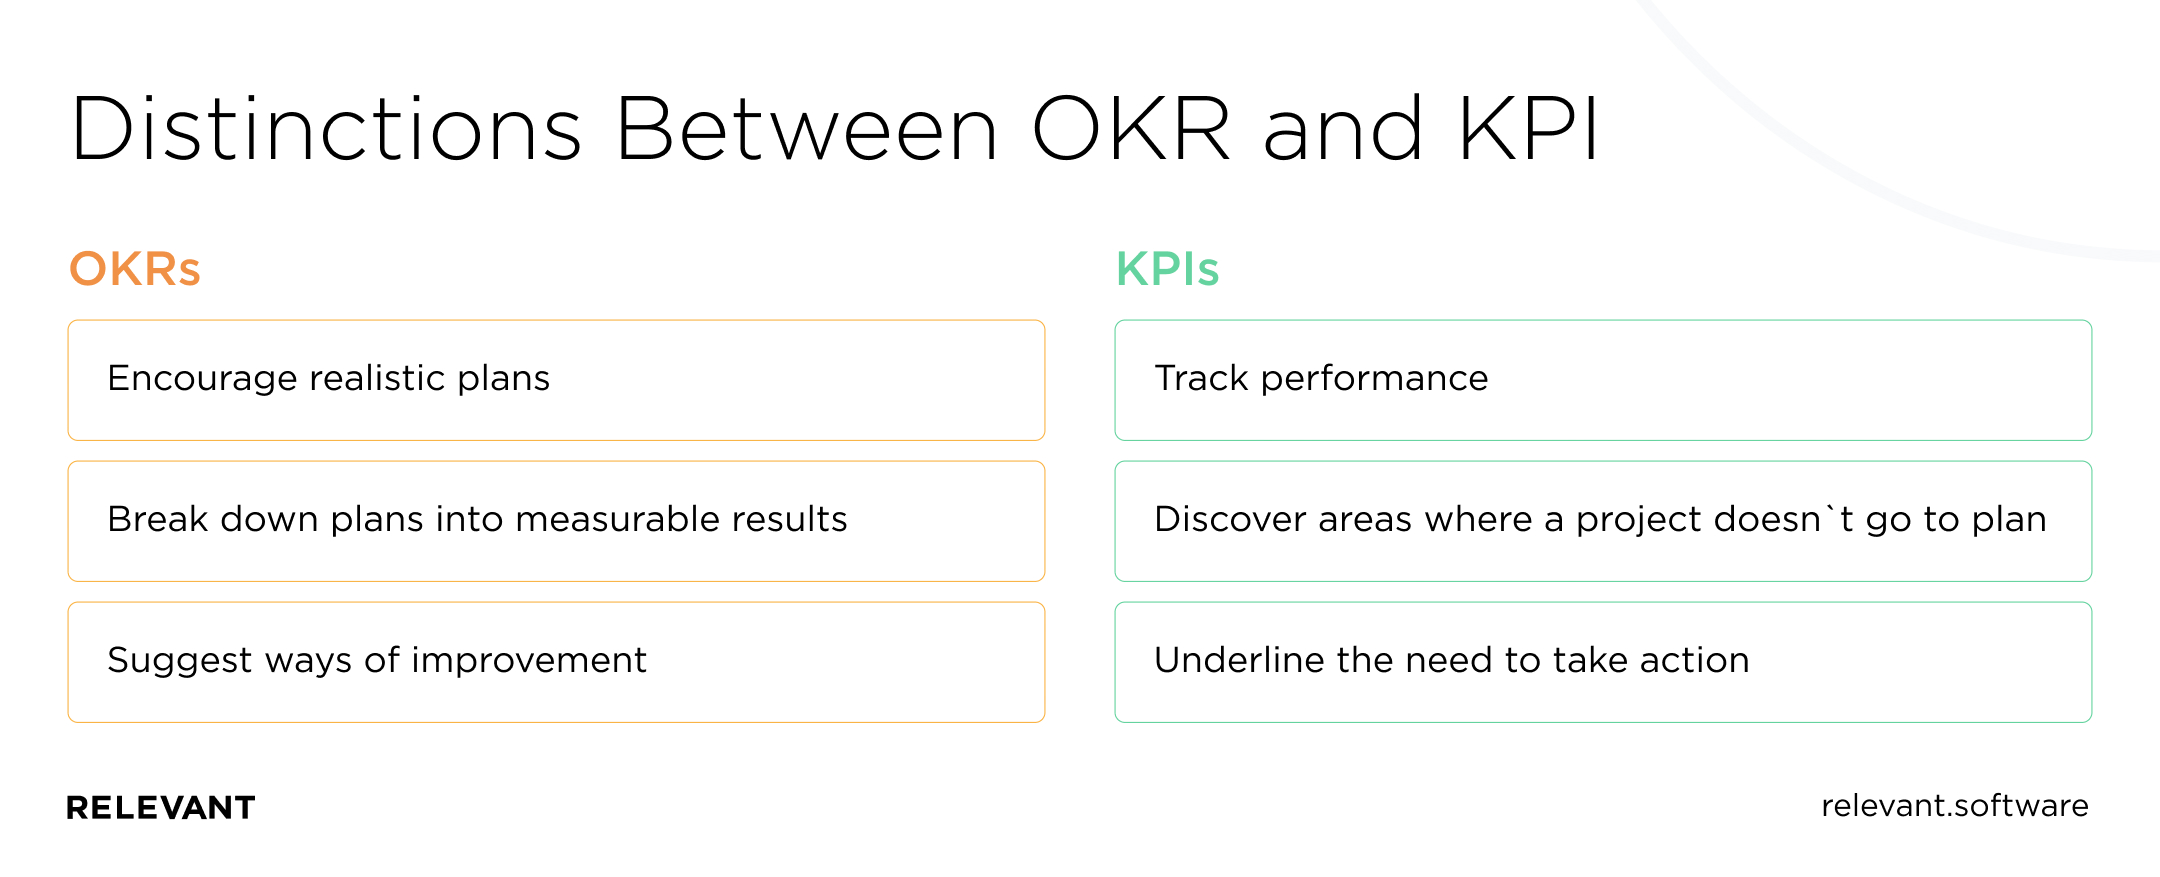 OKRs vs KPIs destinction